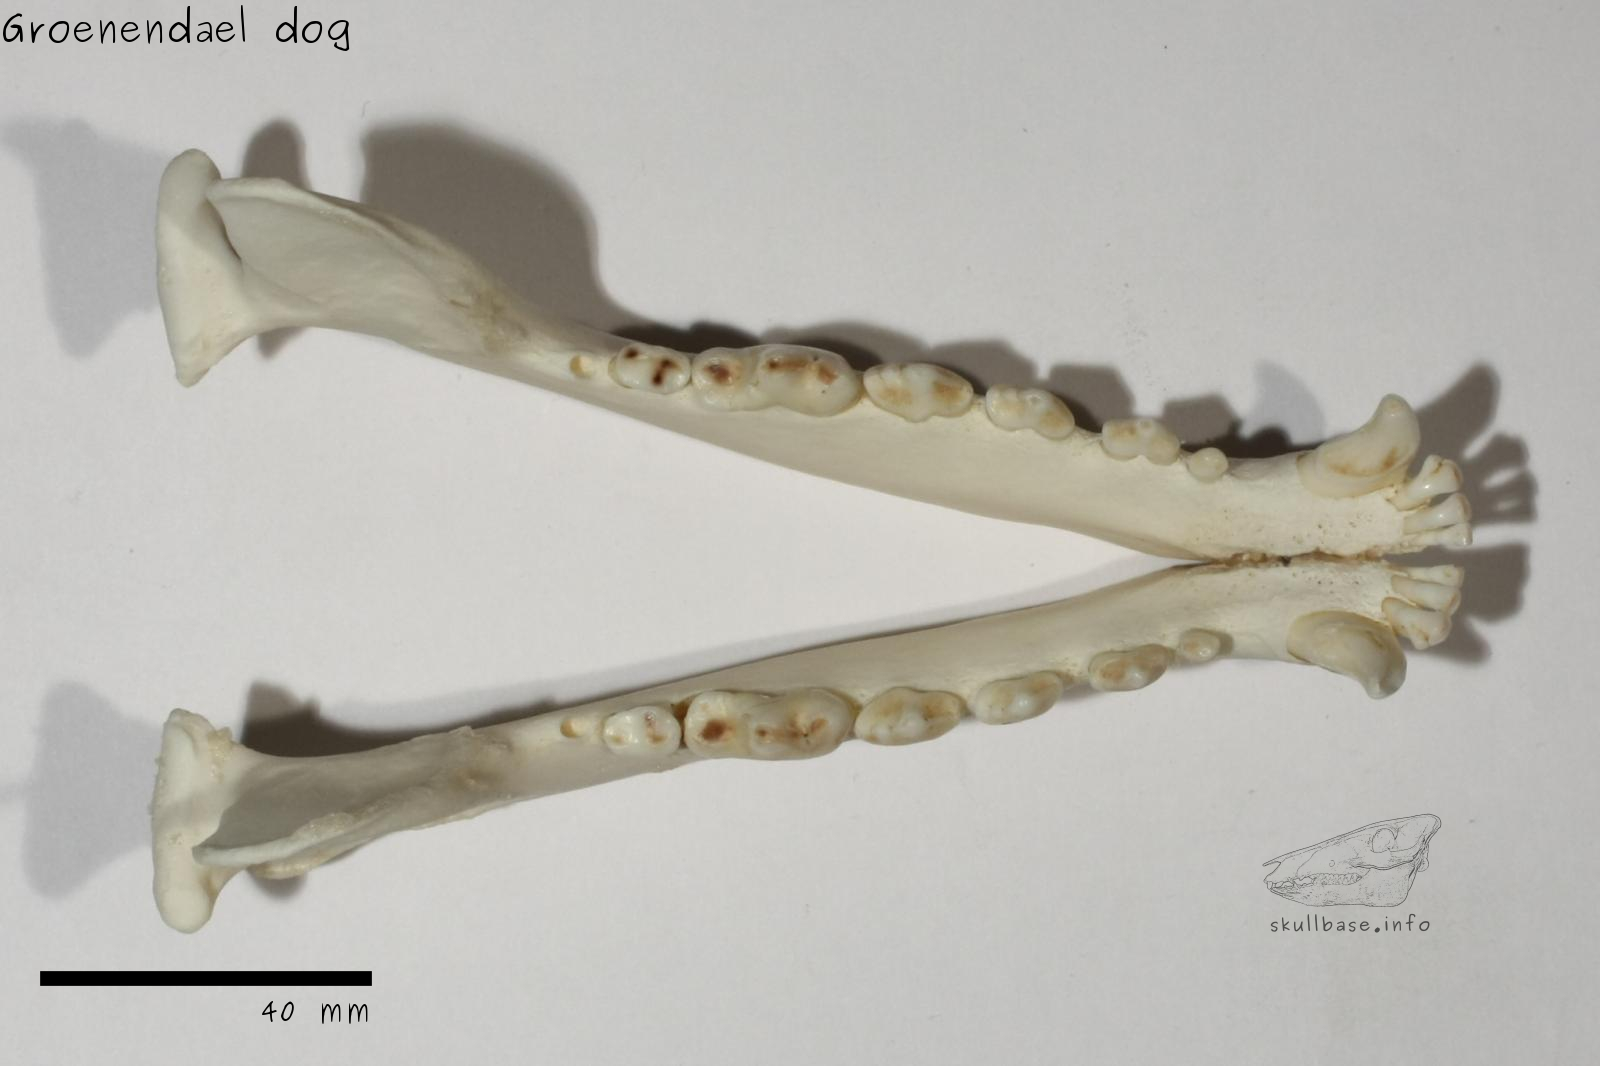 Groenendael dog (Canis lupus familiaris) jaw